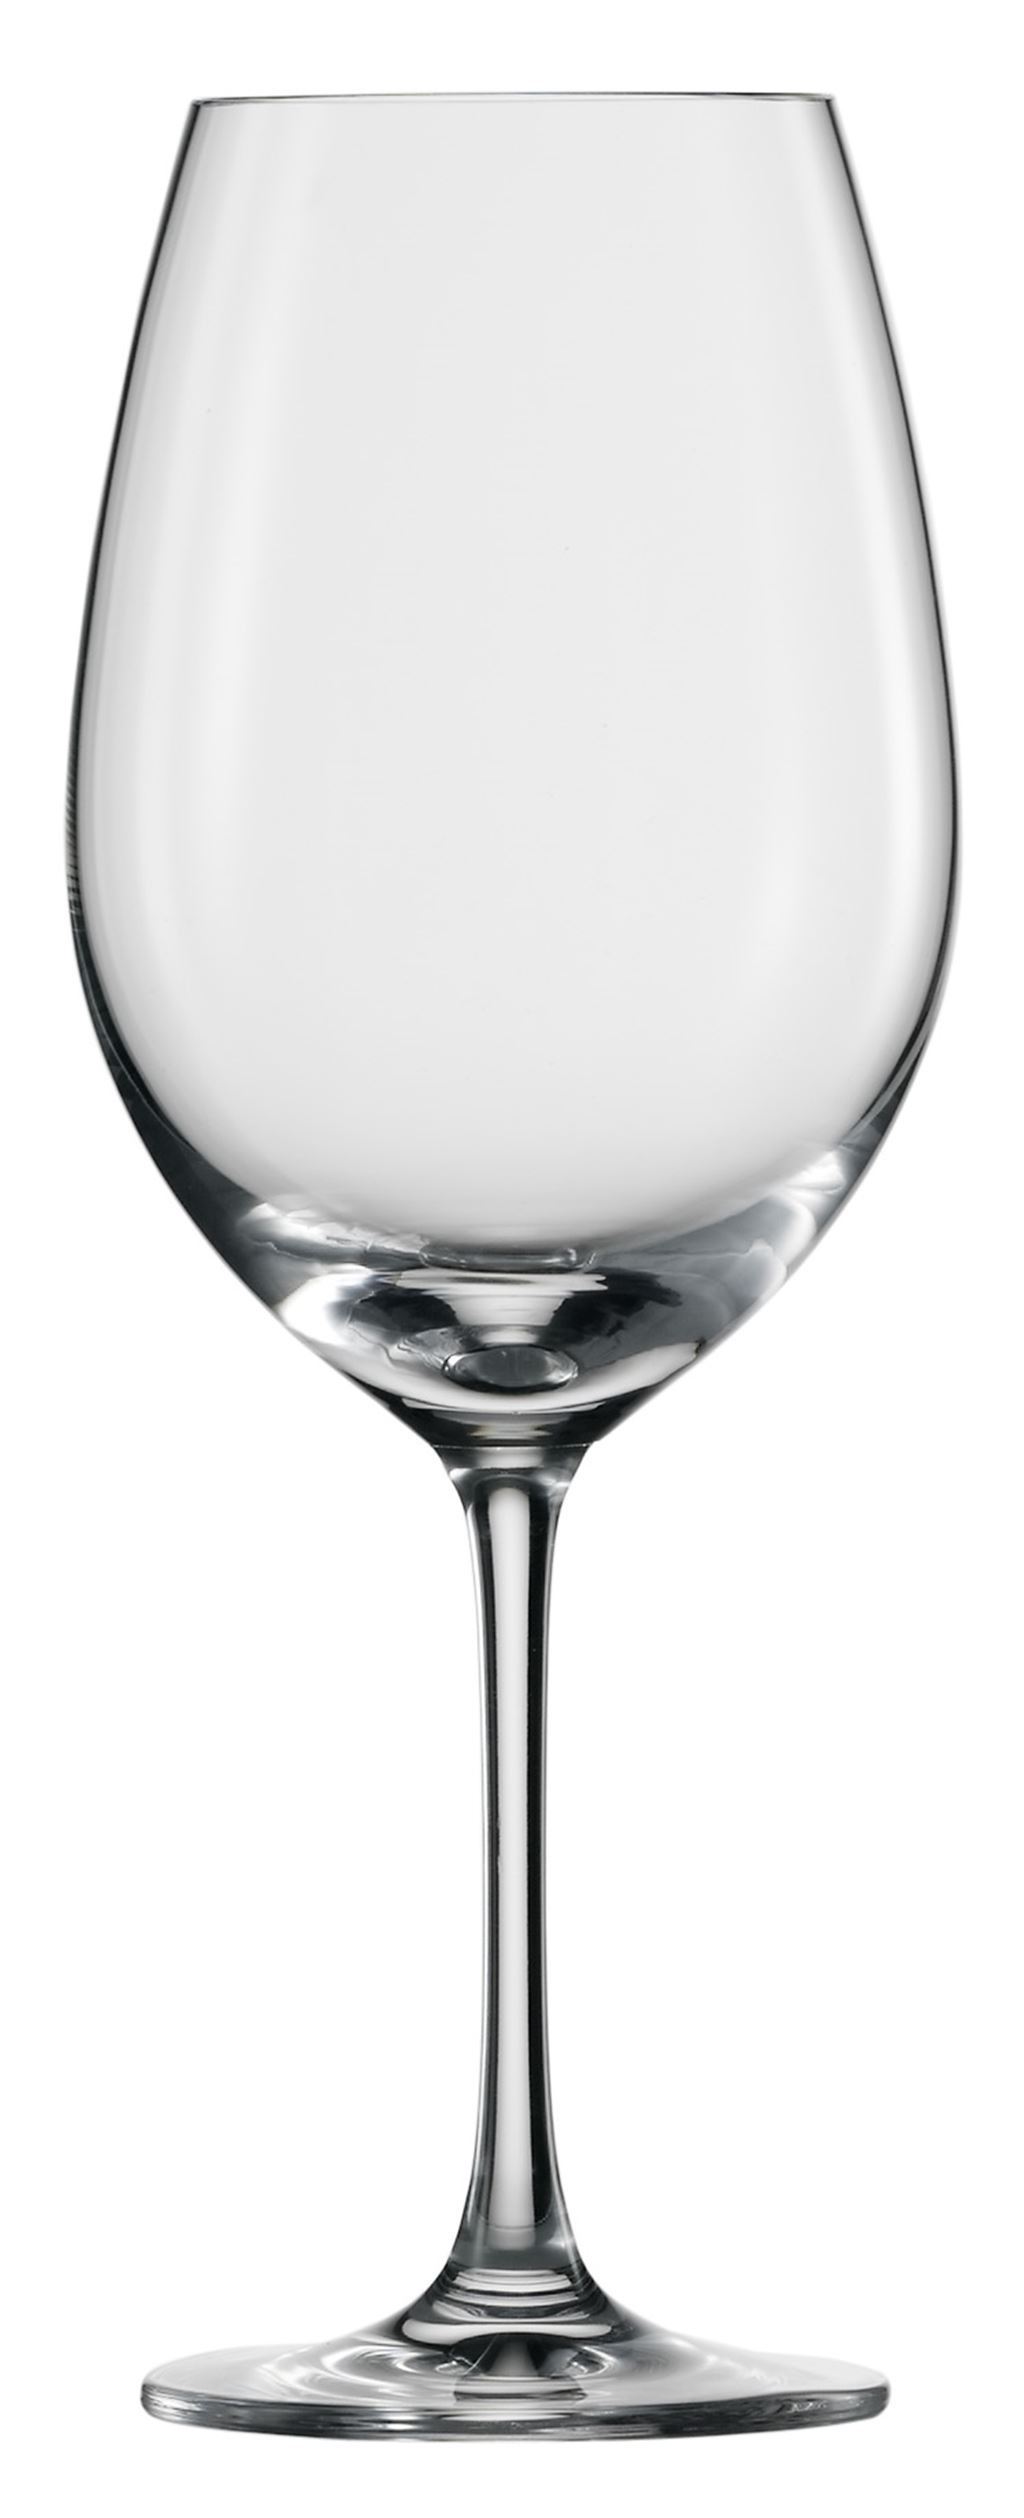 Schott zwiesel, ivento, kozarec za rdeče vino, 506 ml, 1 kos